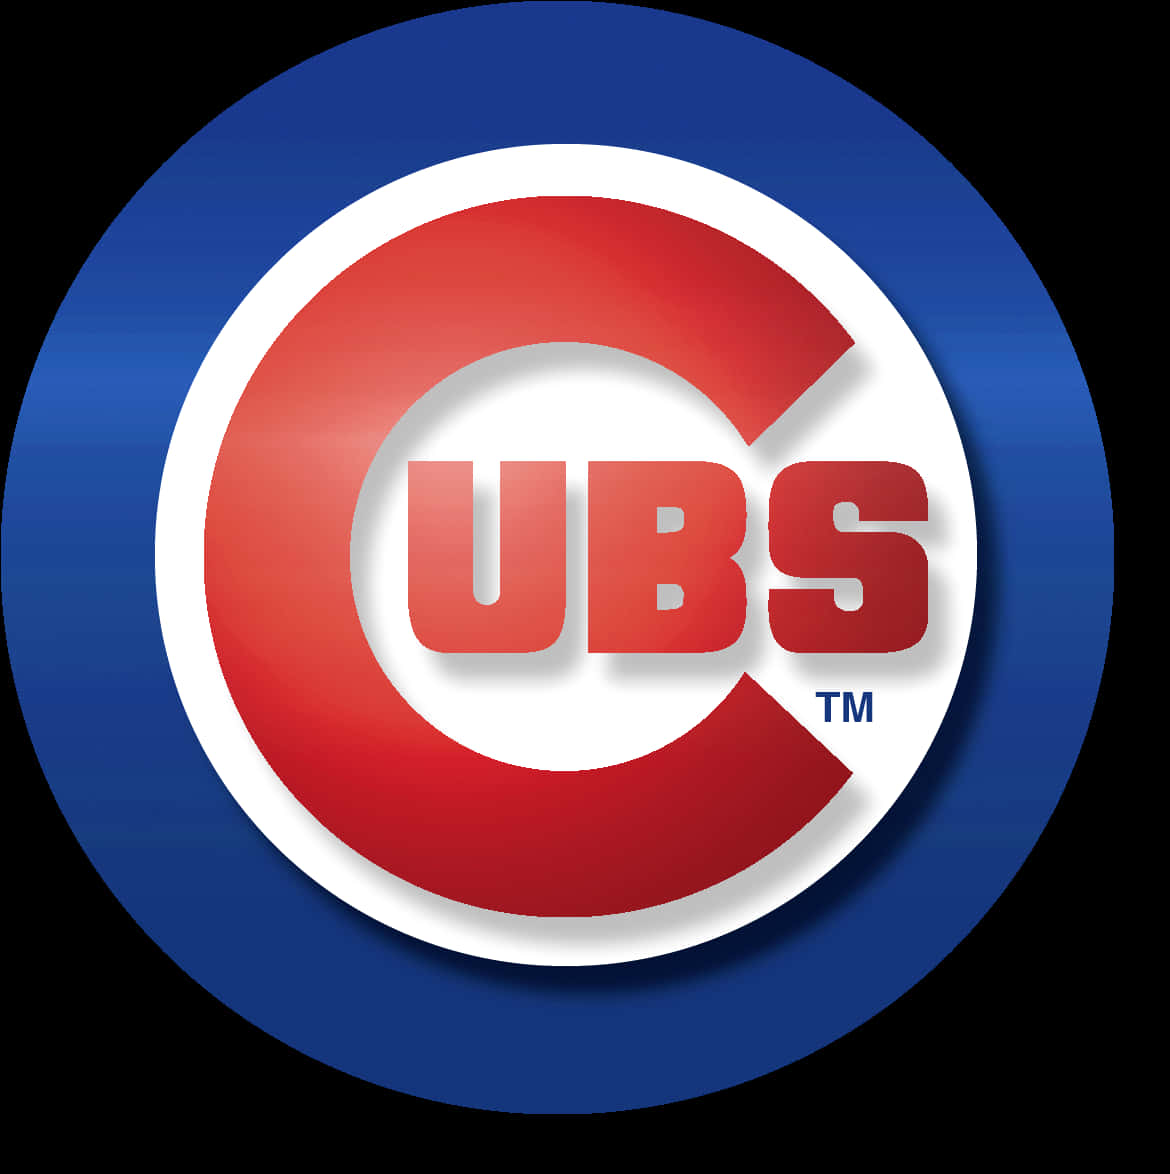 Chicago Cubs Logo Image PNG